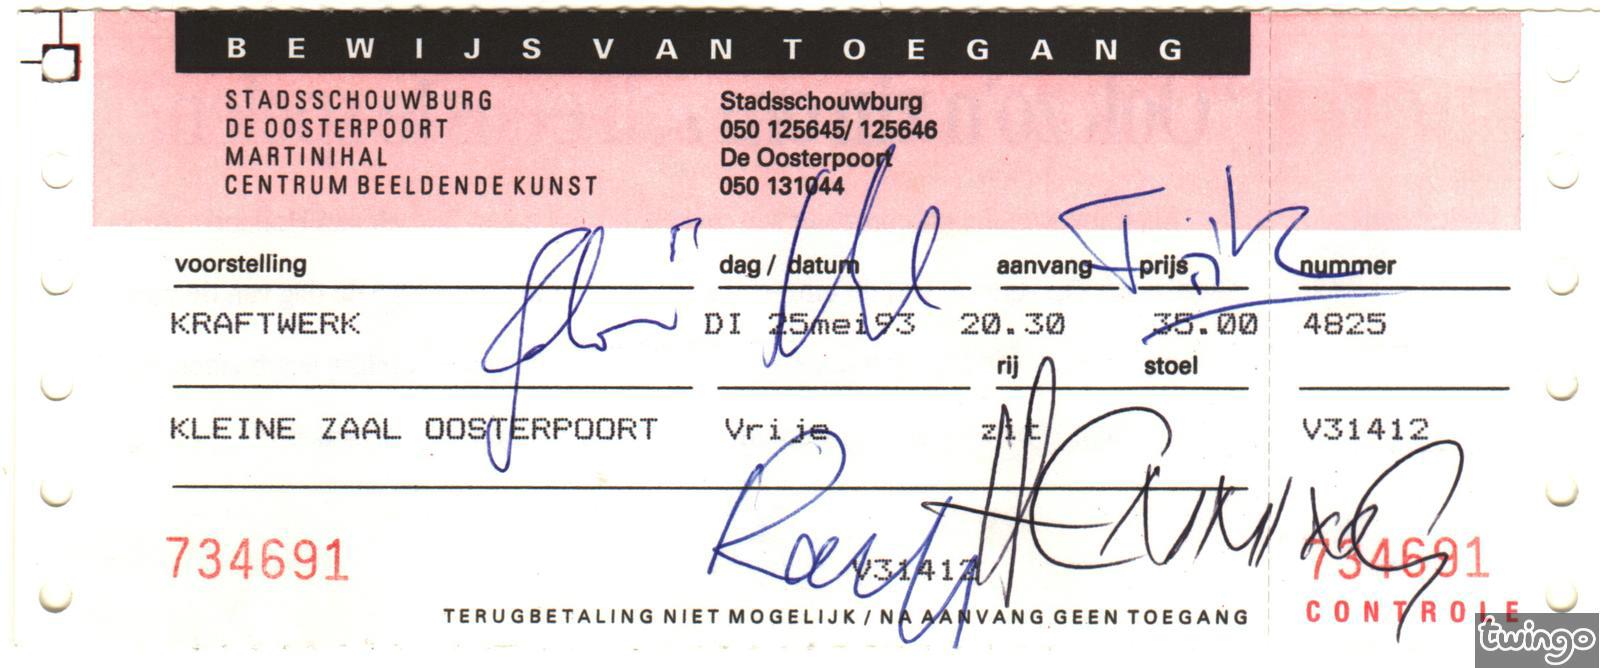 19930525-groningen-ticket01.jpg